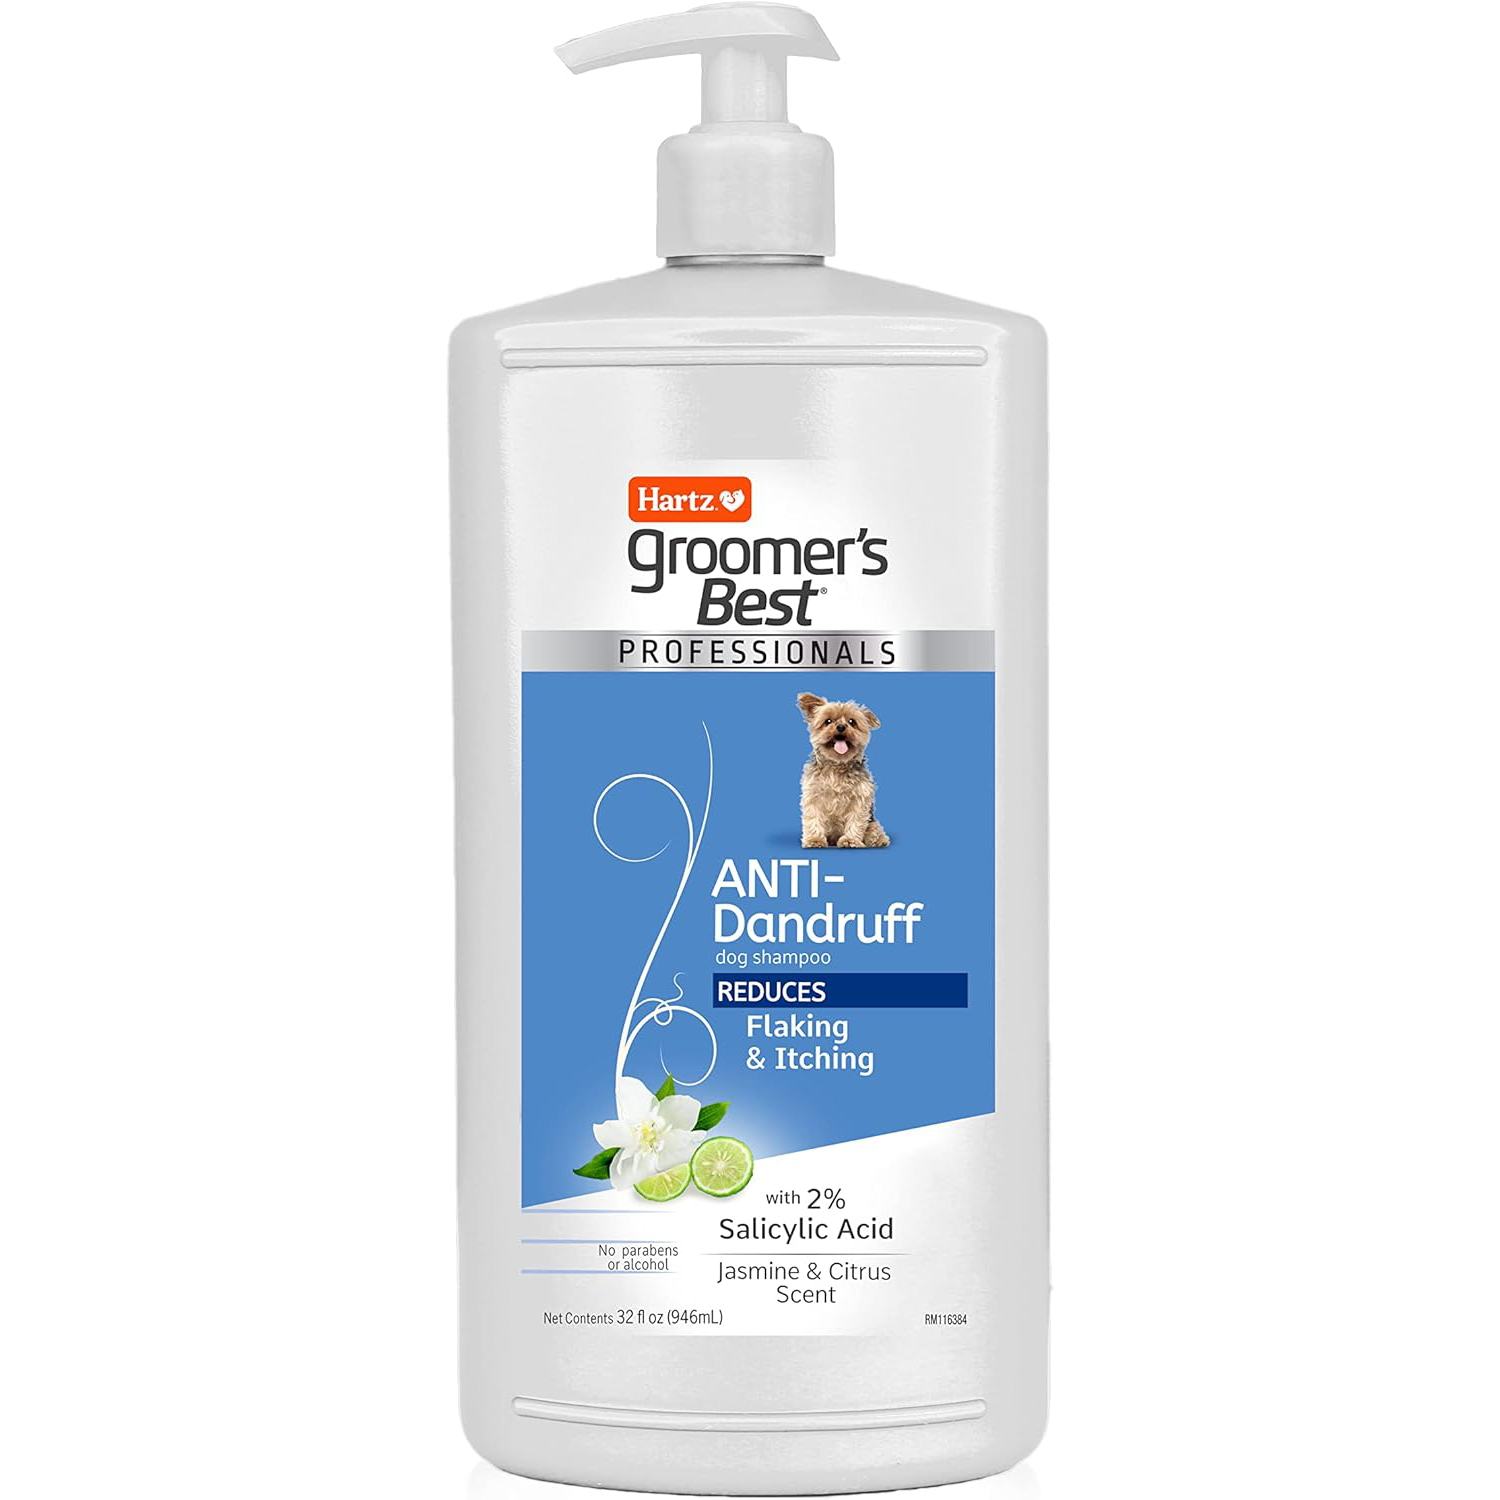 Groomer's Best Professionals Anti-Dandruff Medicated Dog Shampoo 